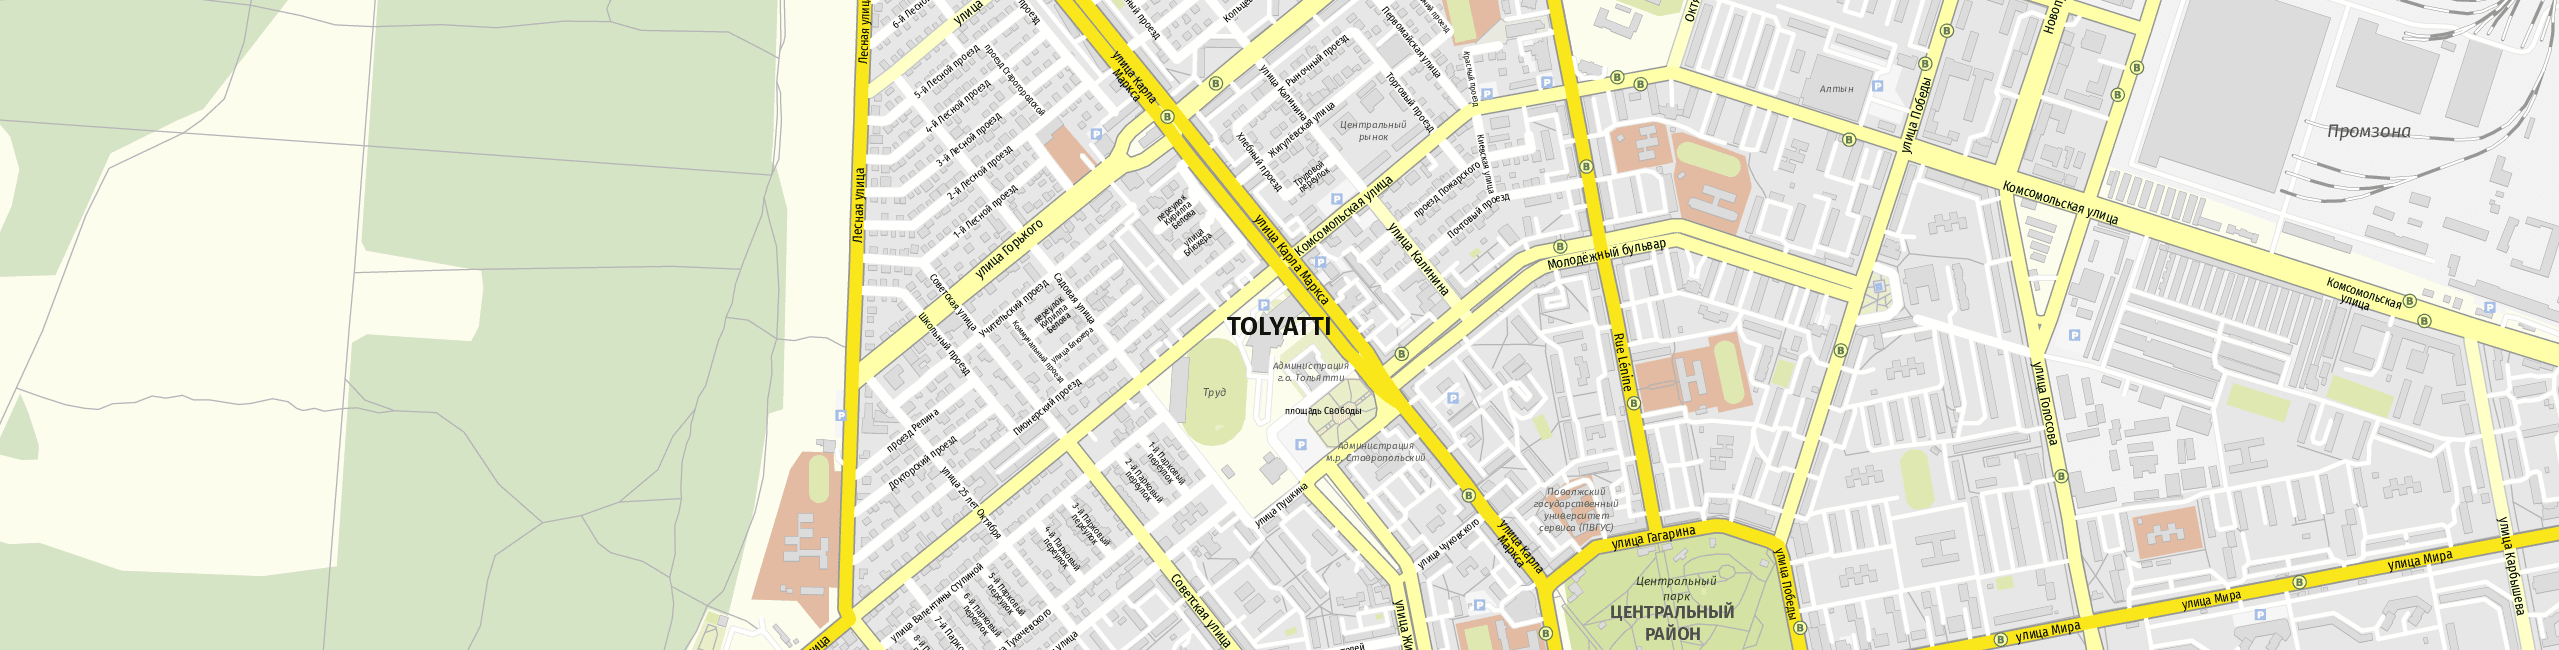 Stadtplan Toljatti zum Downloaden.